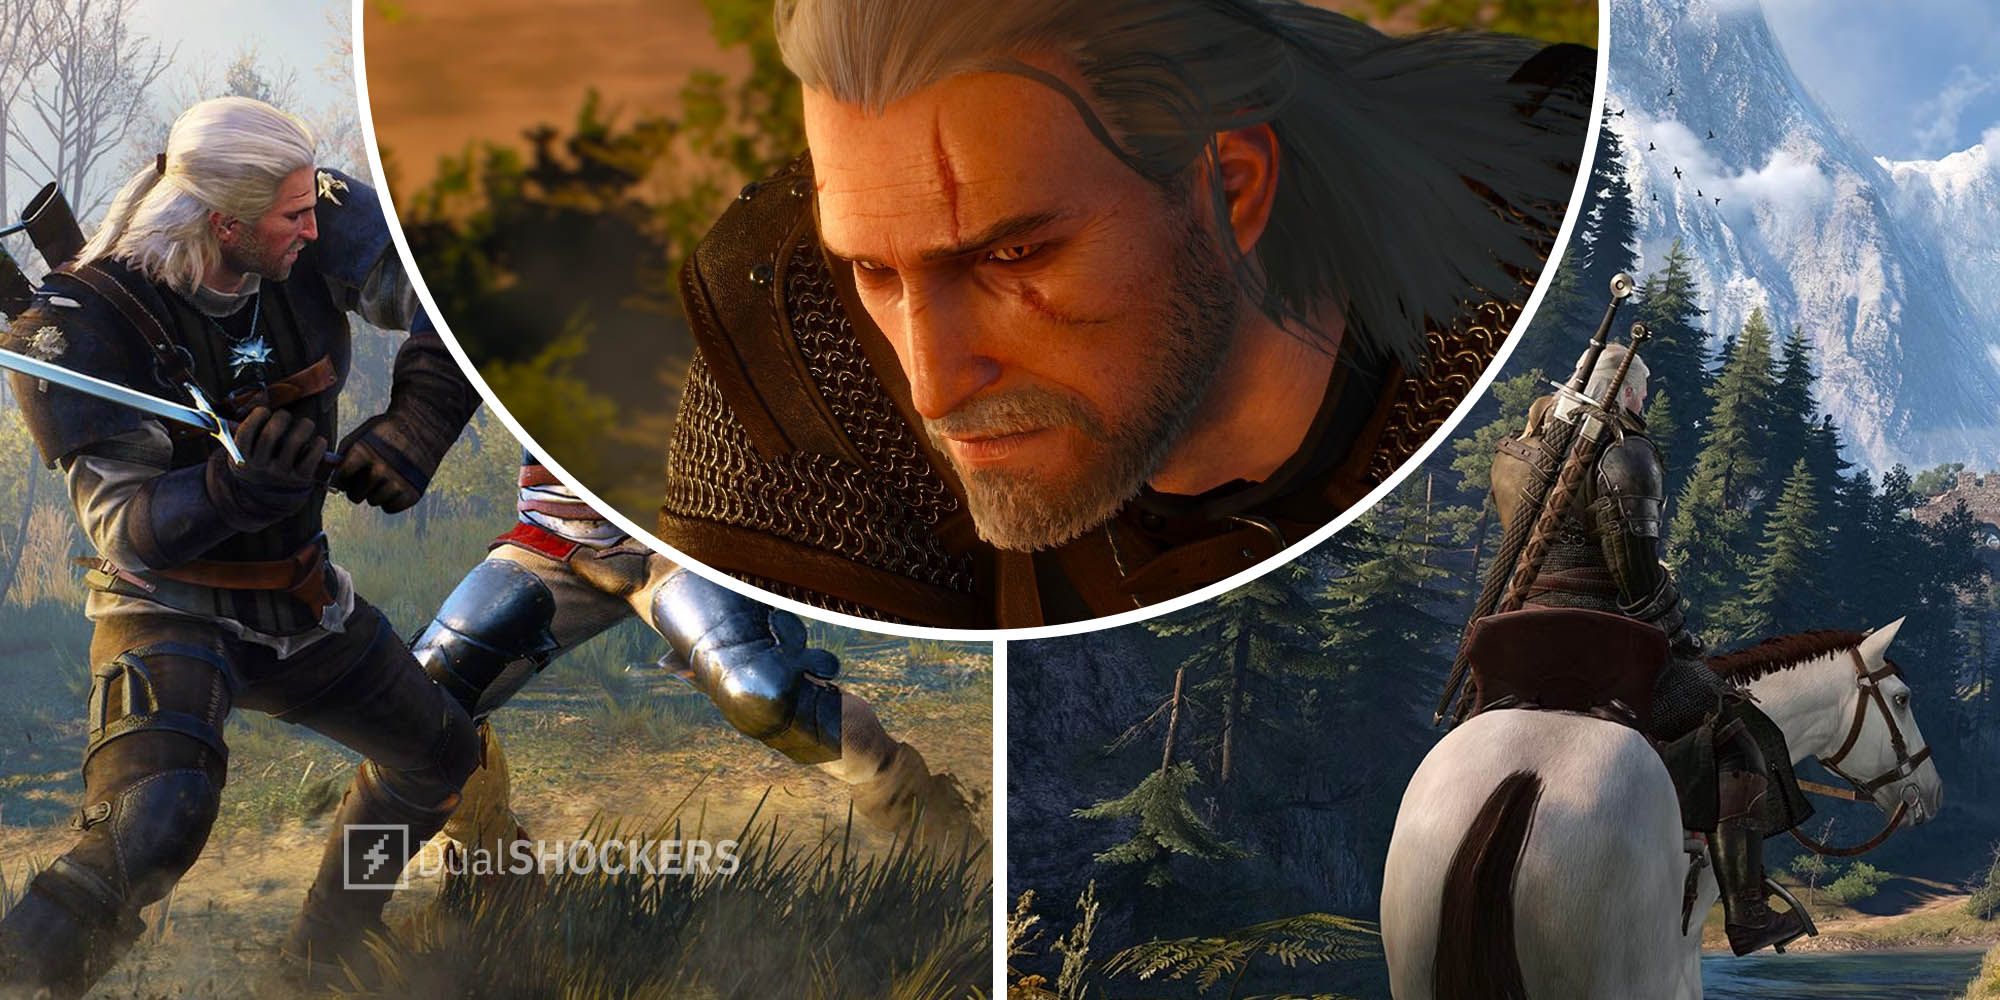 The Witcher 3 Wild Hunt next gen update Geralt in multiple screenshots fighting, thinking and on horseback